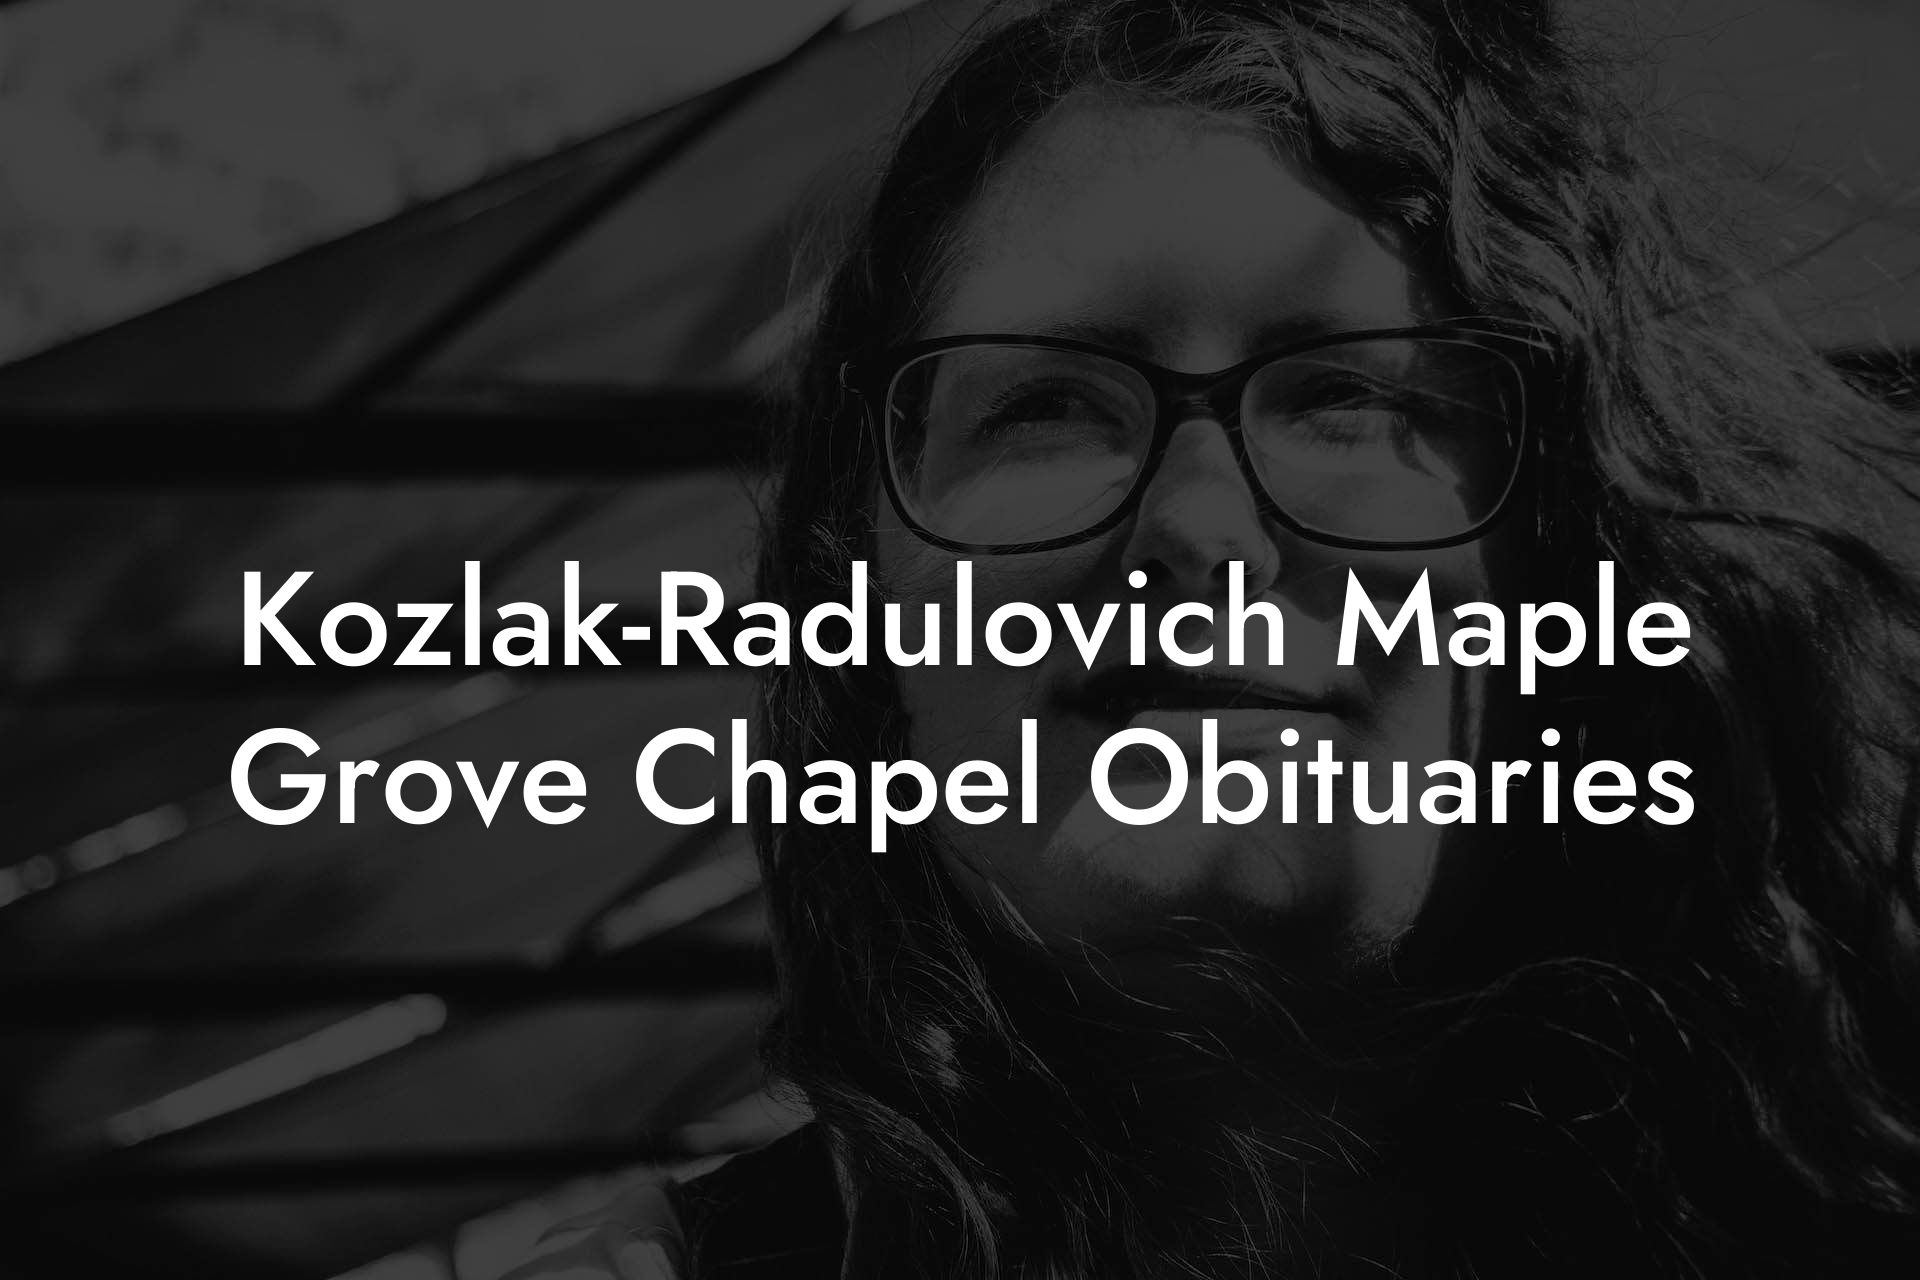 Kozlak-Radulovich Maple Grove Chapel Obituaries